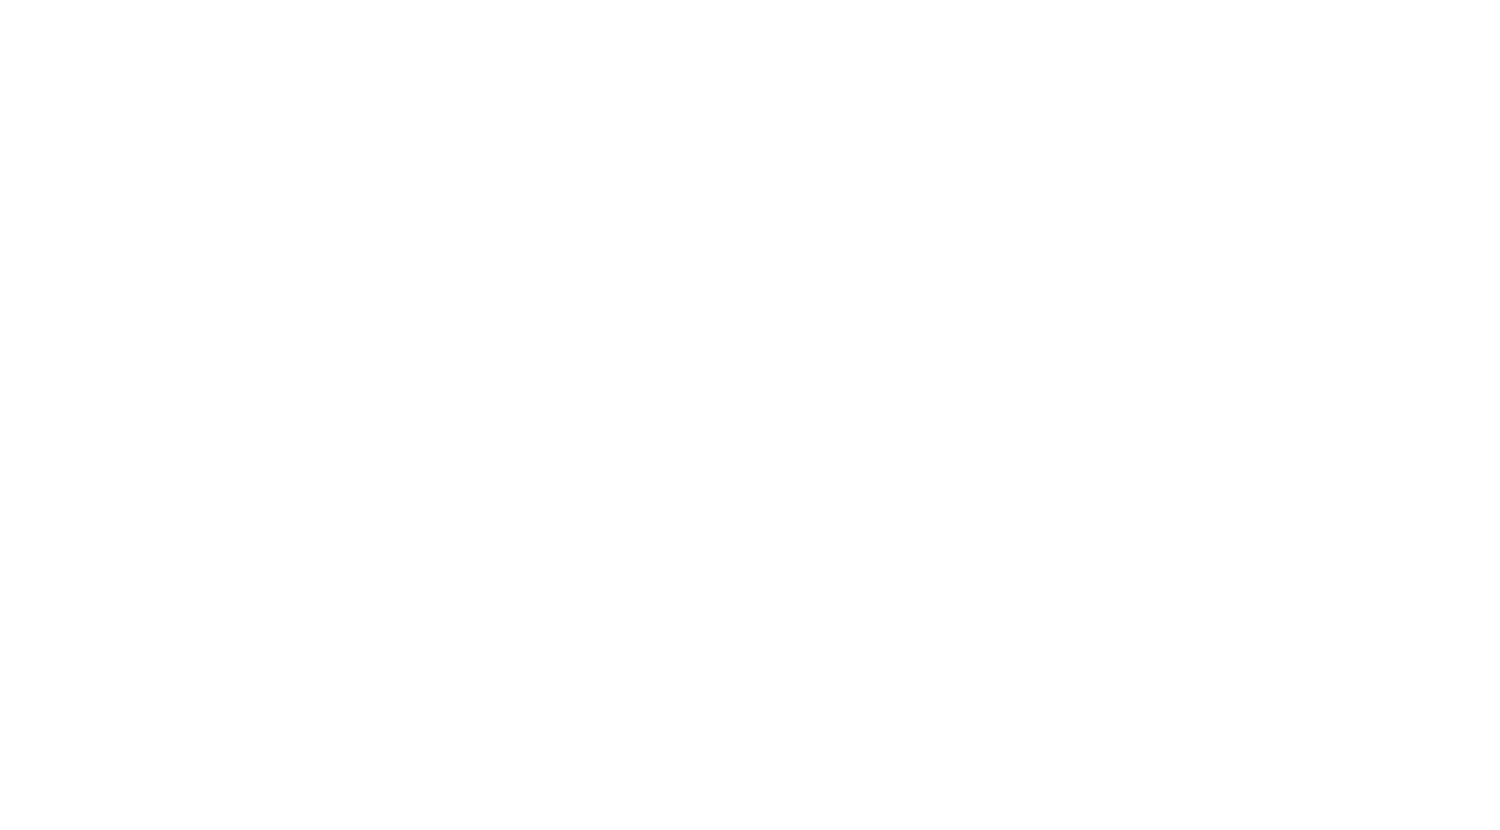 #PragueHandstand